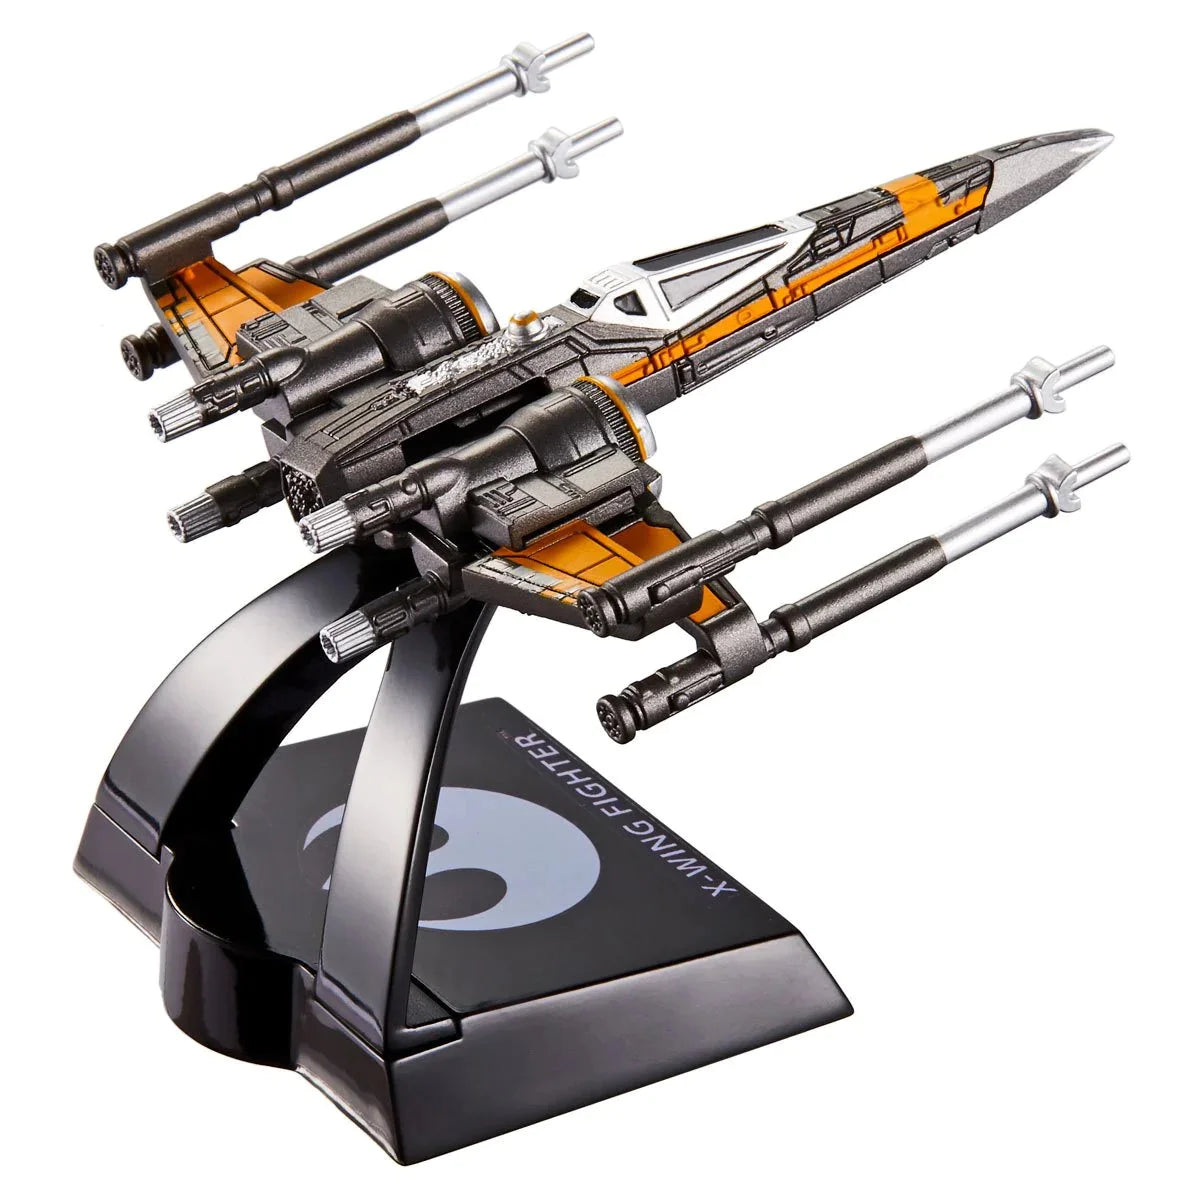 Hot Wheels Star Wars Resistance X-Wing Fighter Premium Replica